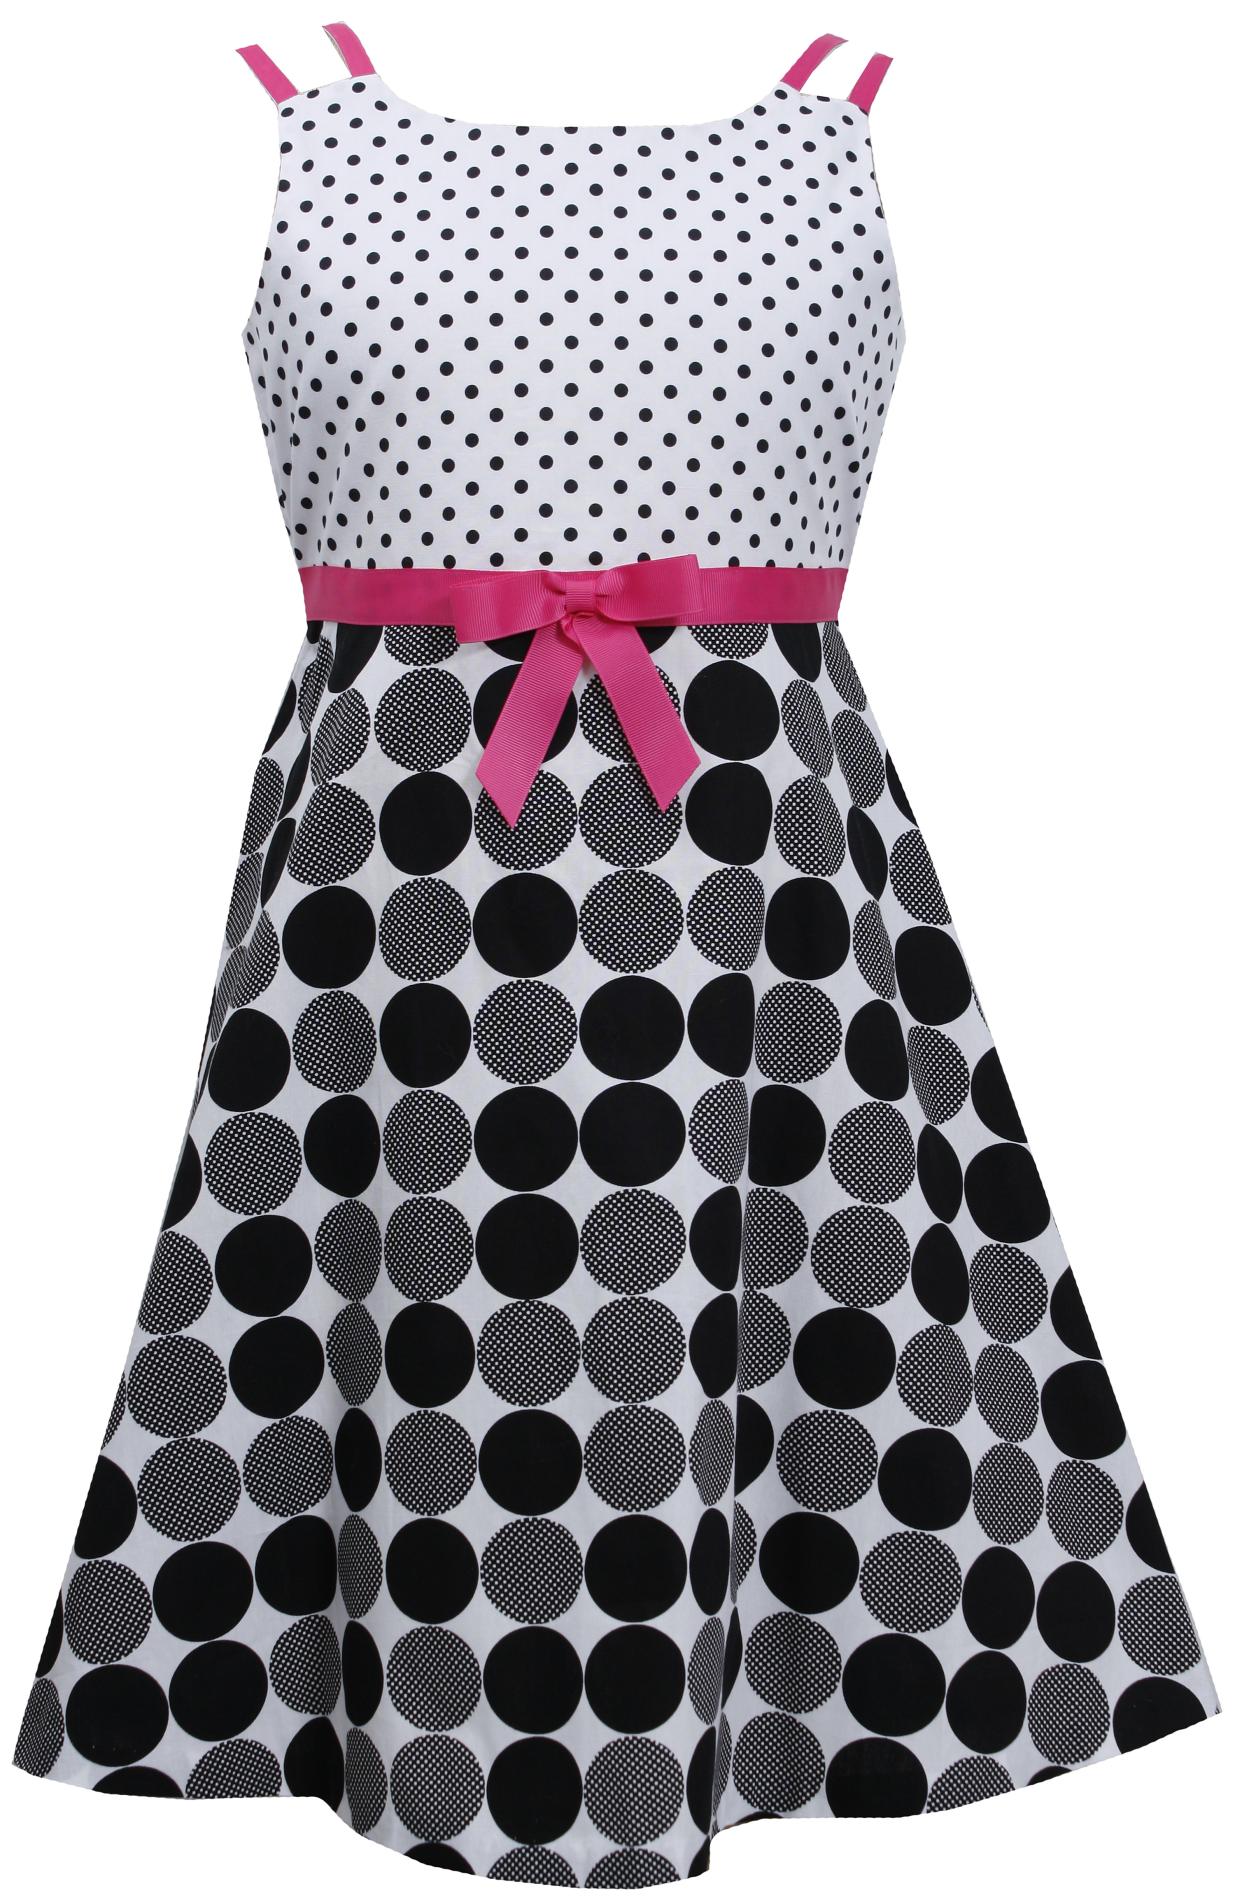 Ashley Ann Girl's Spring Dress - Dots